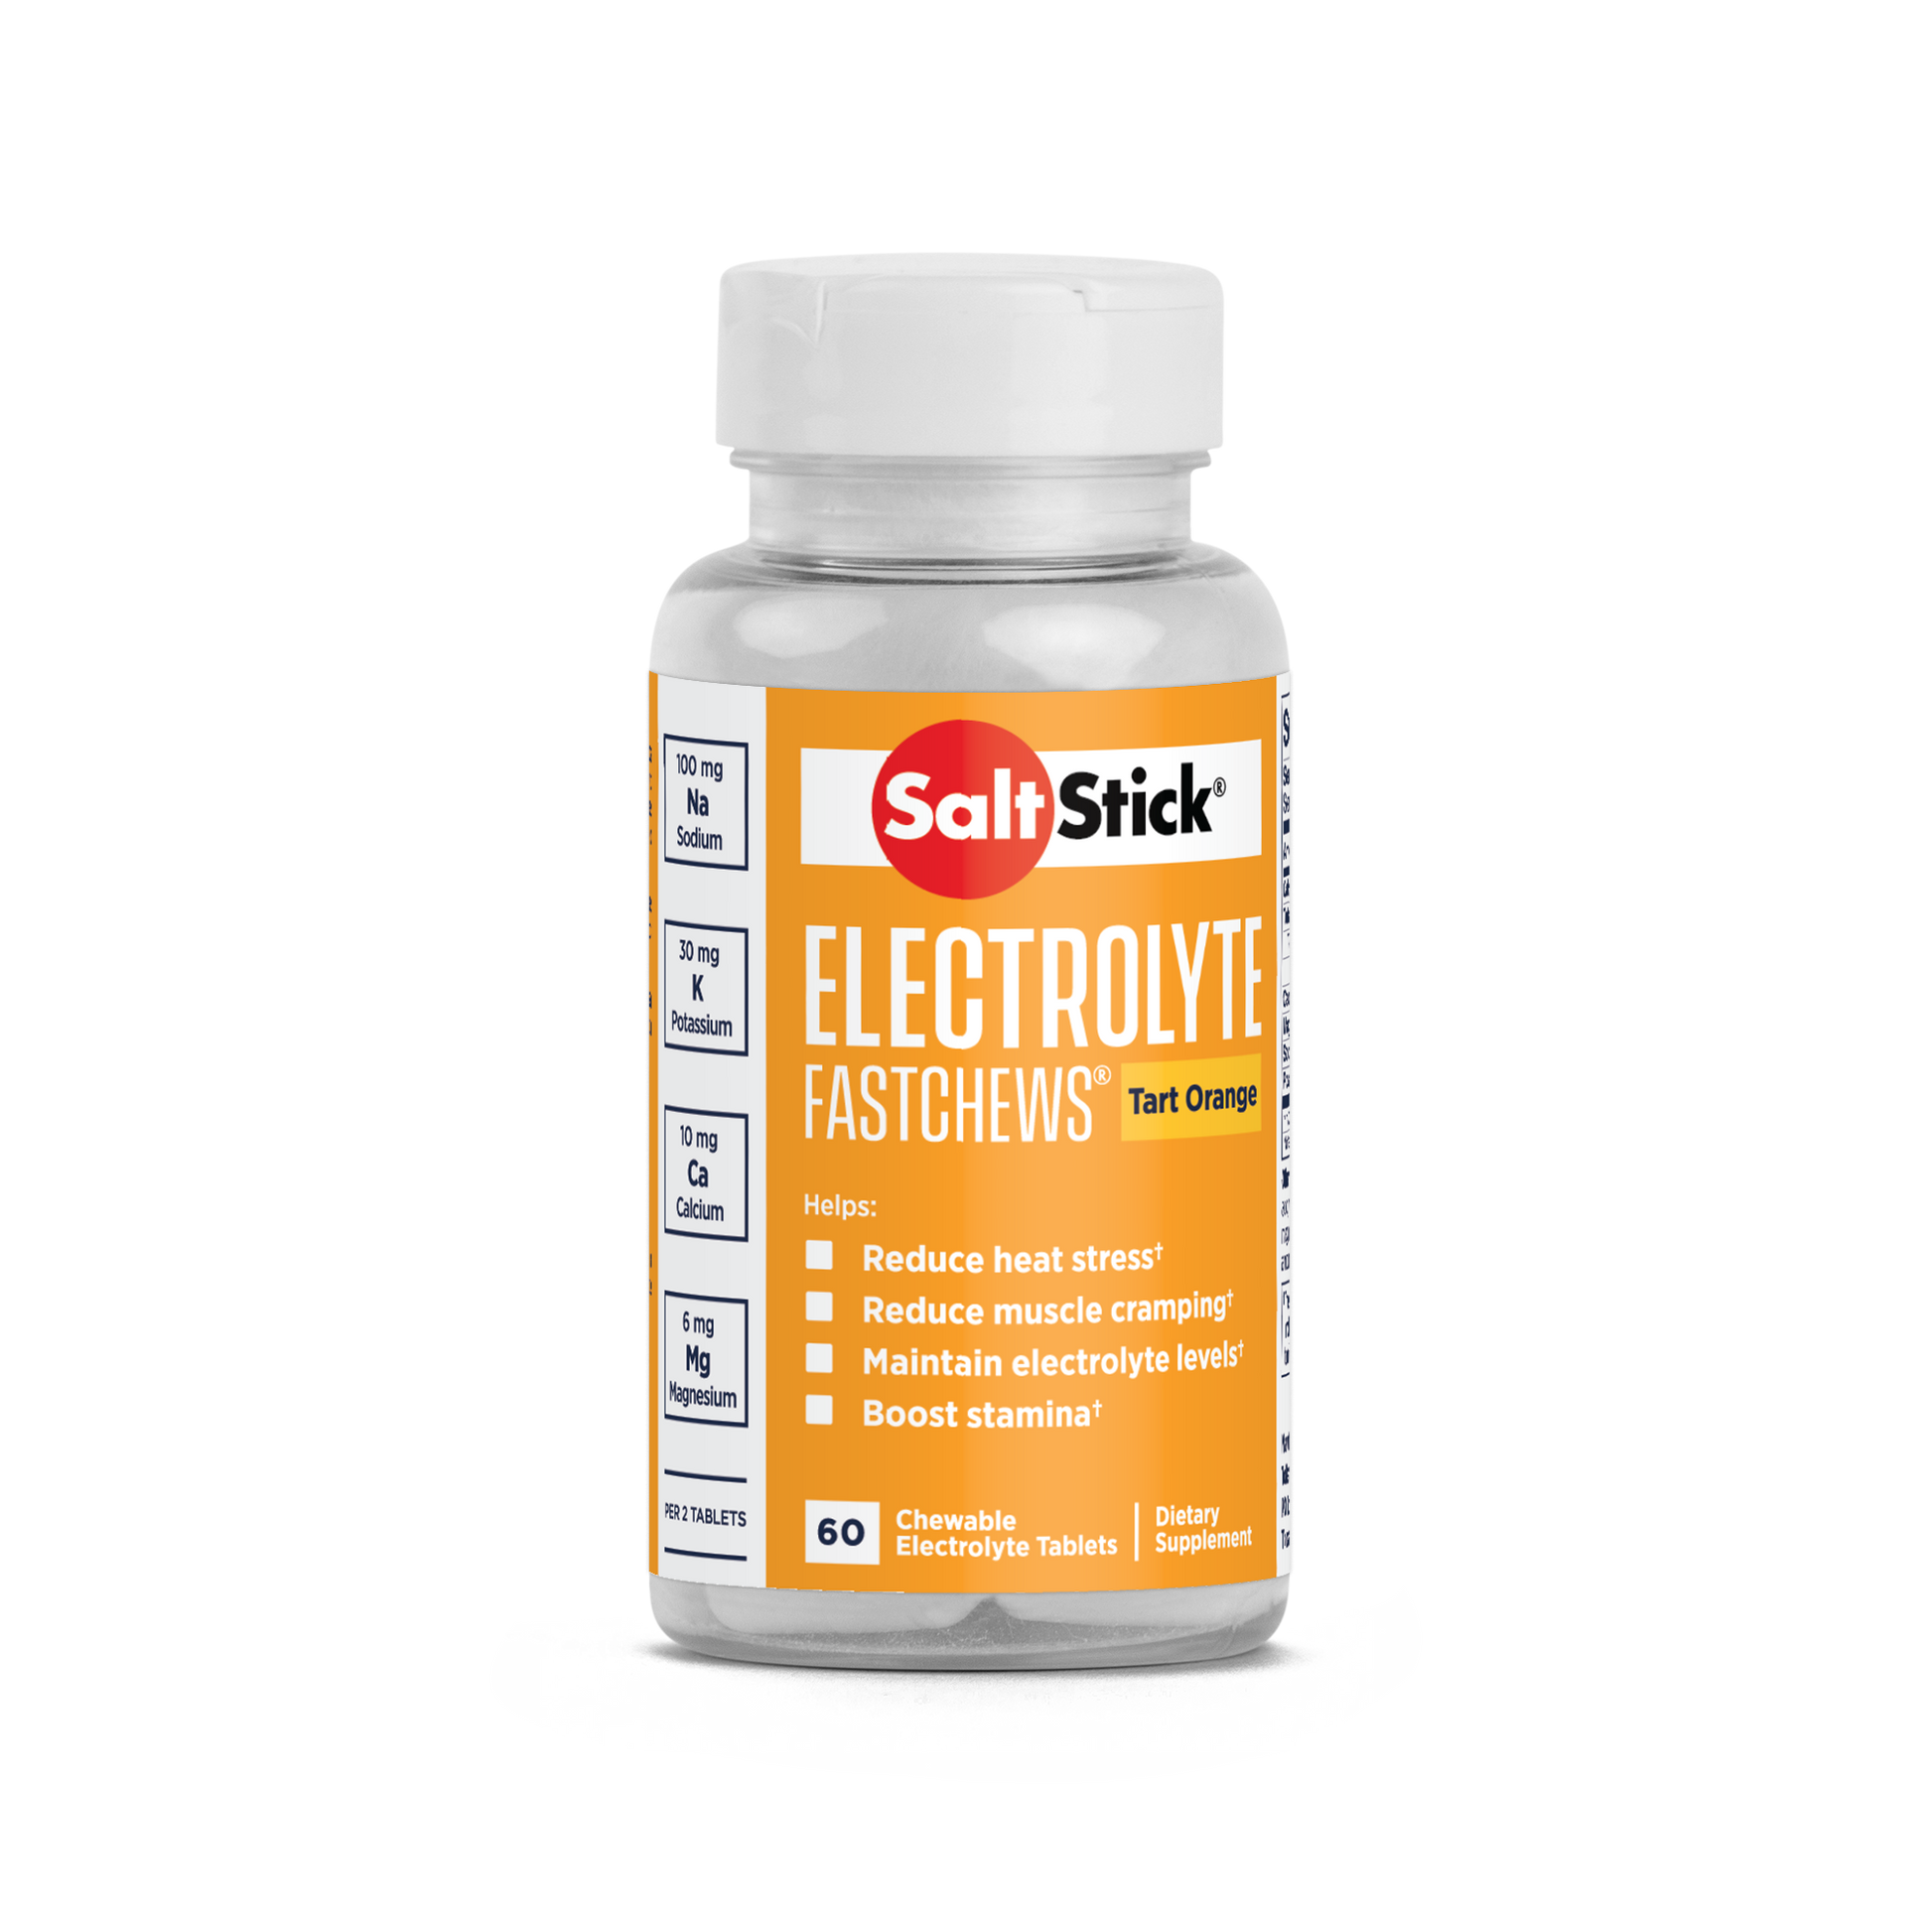 SaltStick FastChews Chewable Electrolyte Tablets Tart Orange Bottle of 60